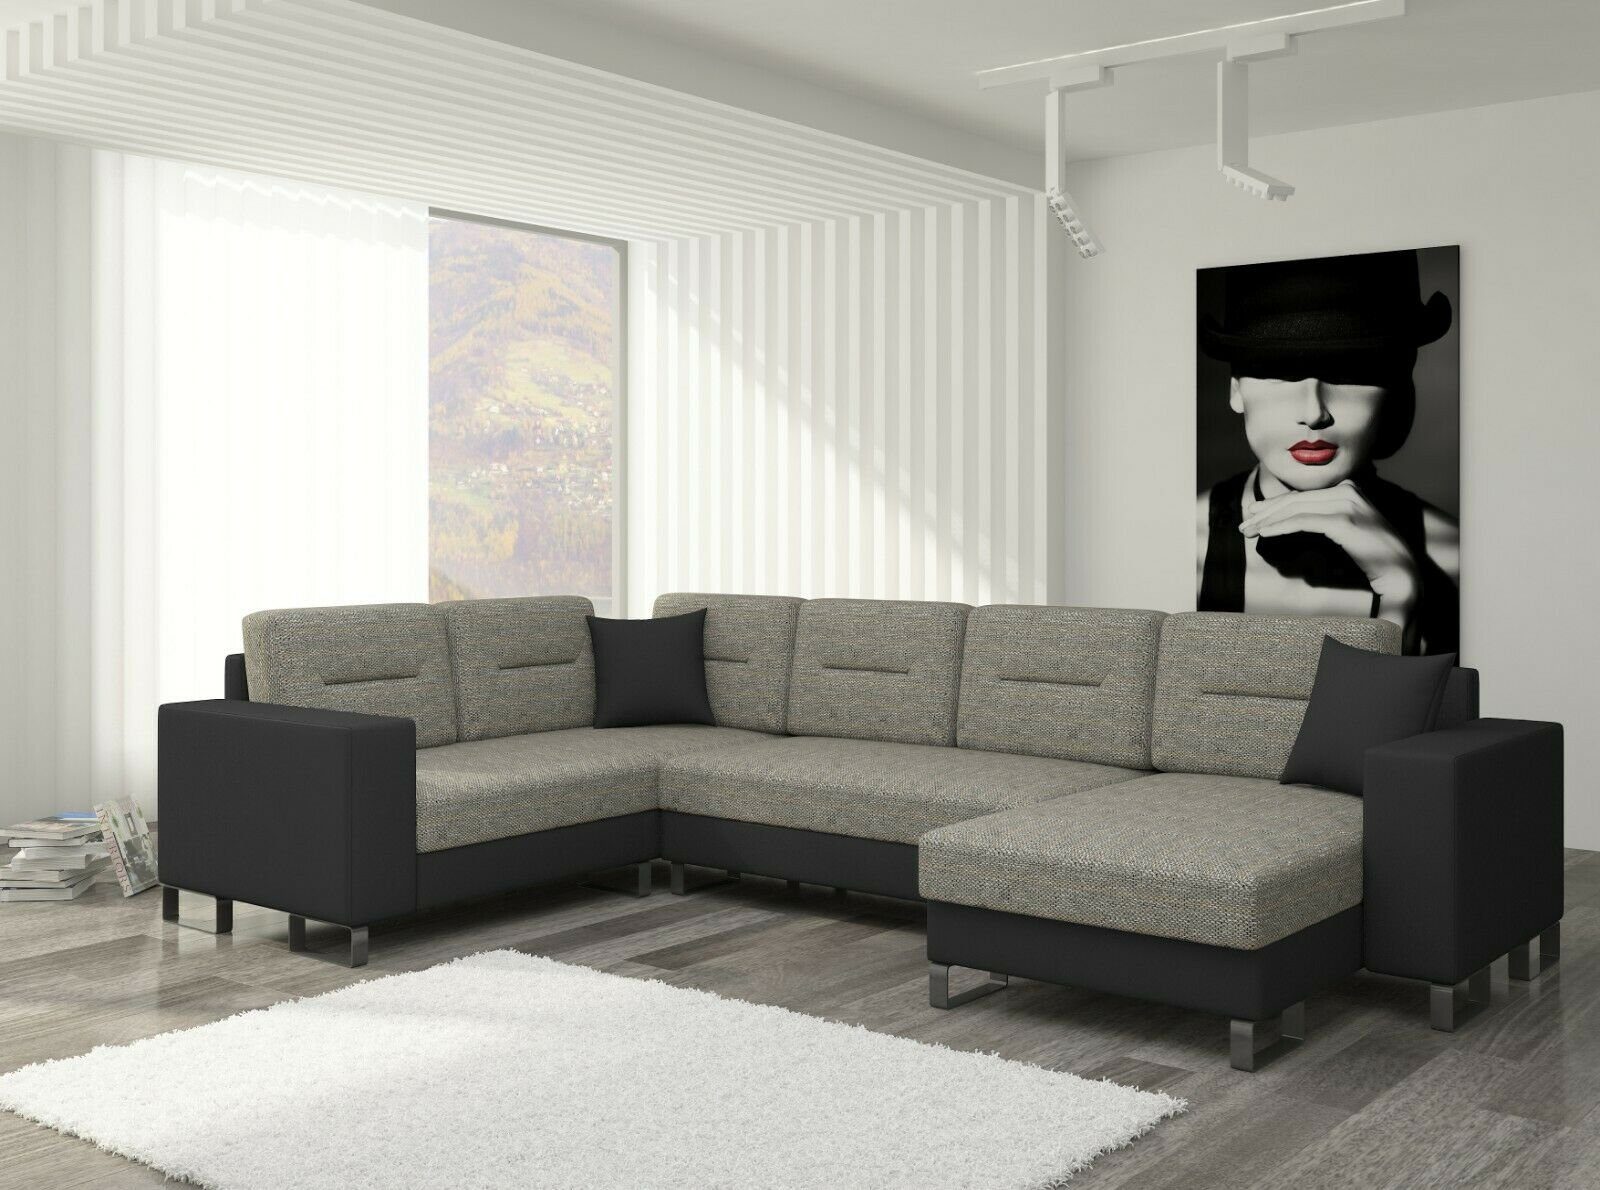 JVmoebel Ecksofa Design Ecksofa Schlafsofa Bettfunktion Couch Leder Polster Textil, Mit Bettfunktion Hellgrau/Dunkelgrau